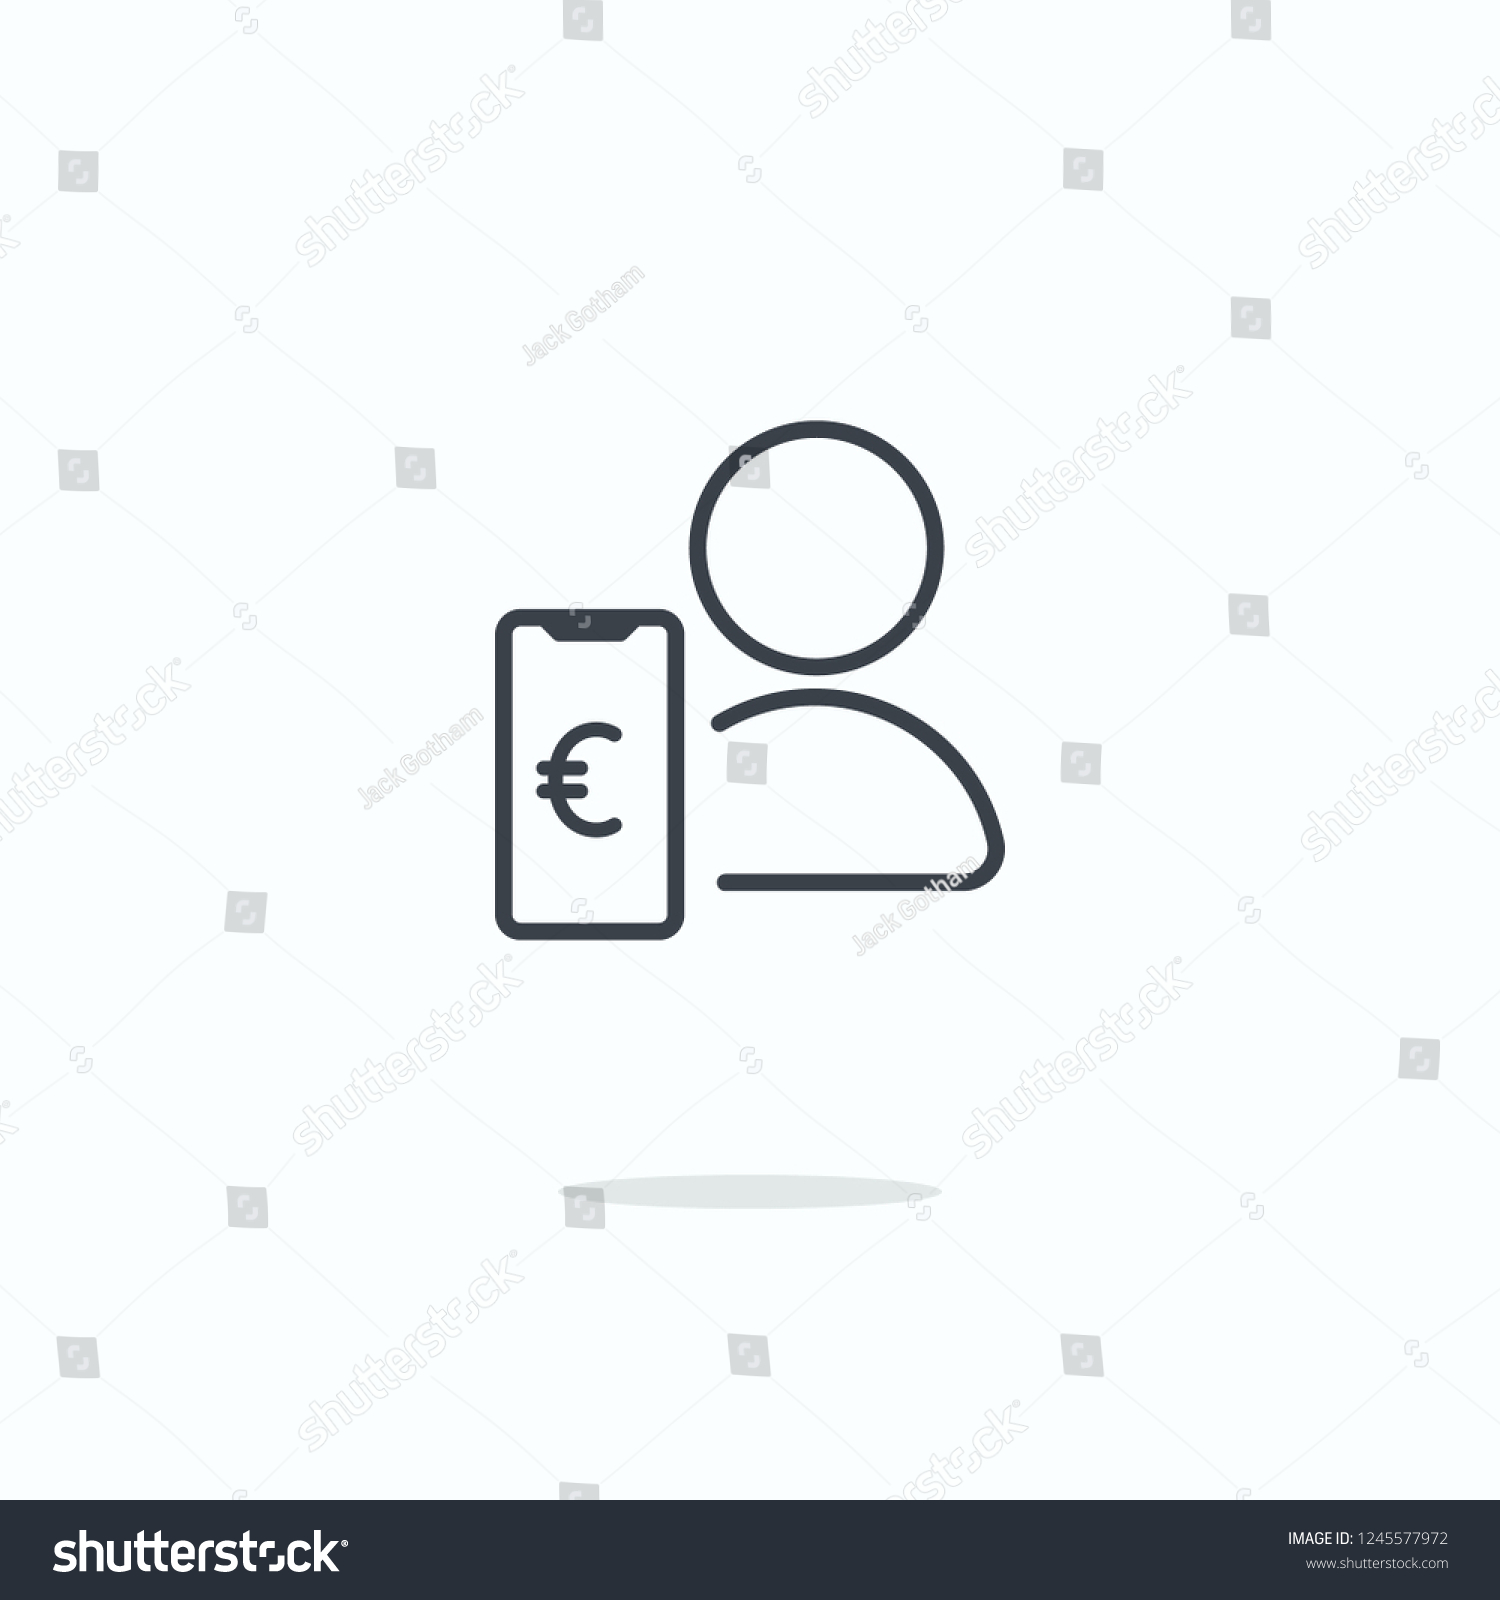 SVG of 
Gig Economy icon euro svg